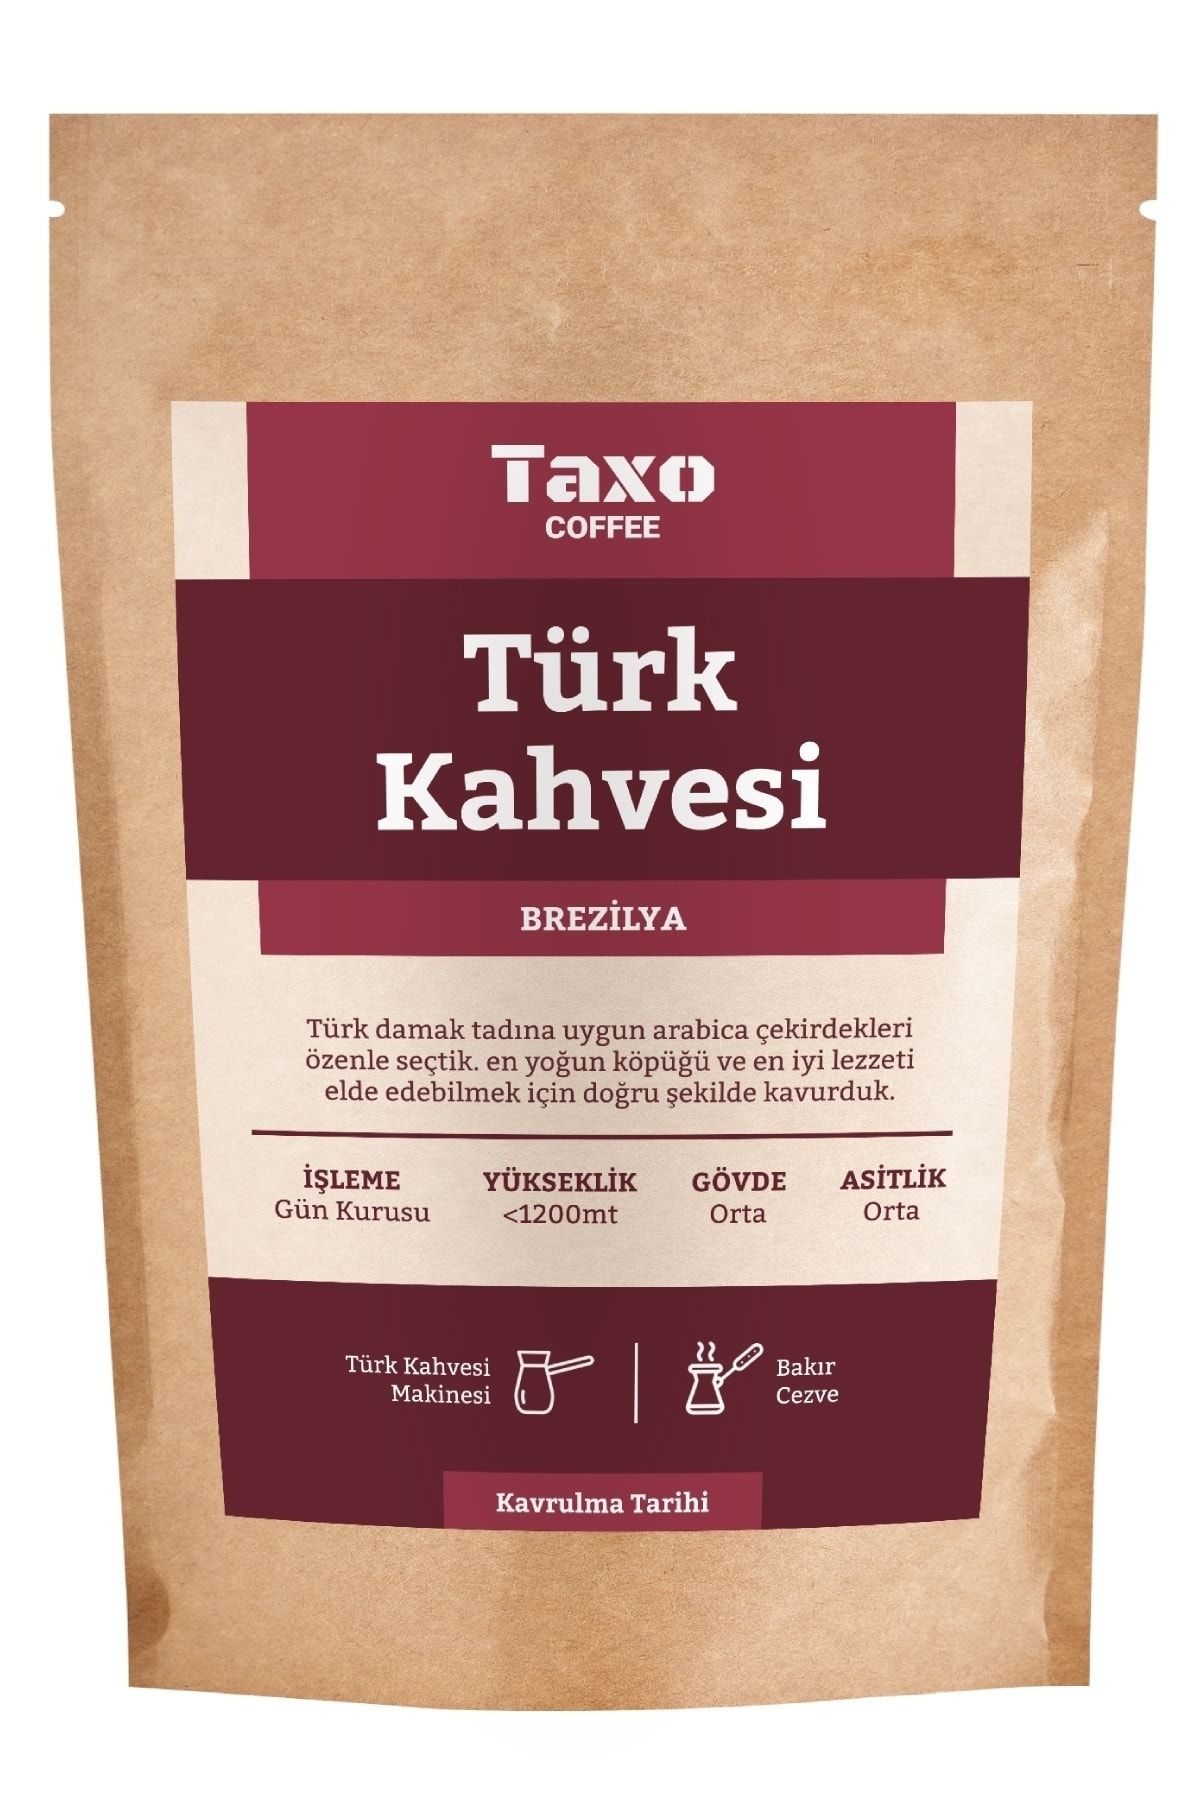 Taxo Coffee Nitelikli Türk Kahvesi 250gr